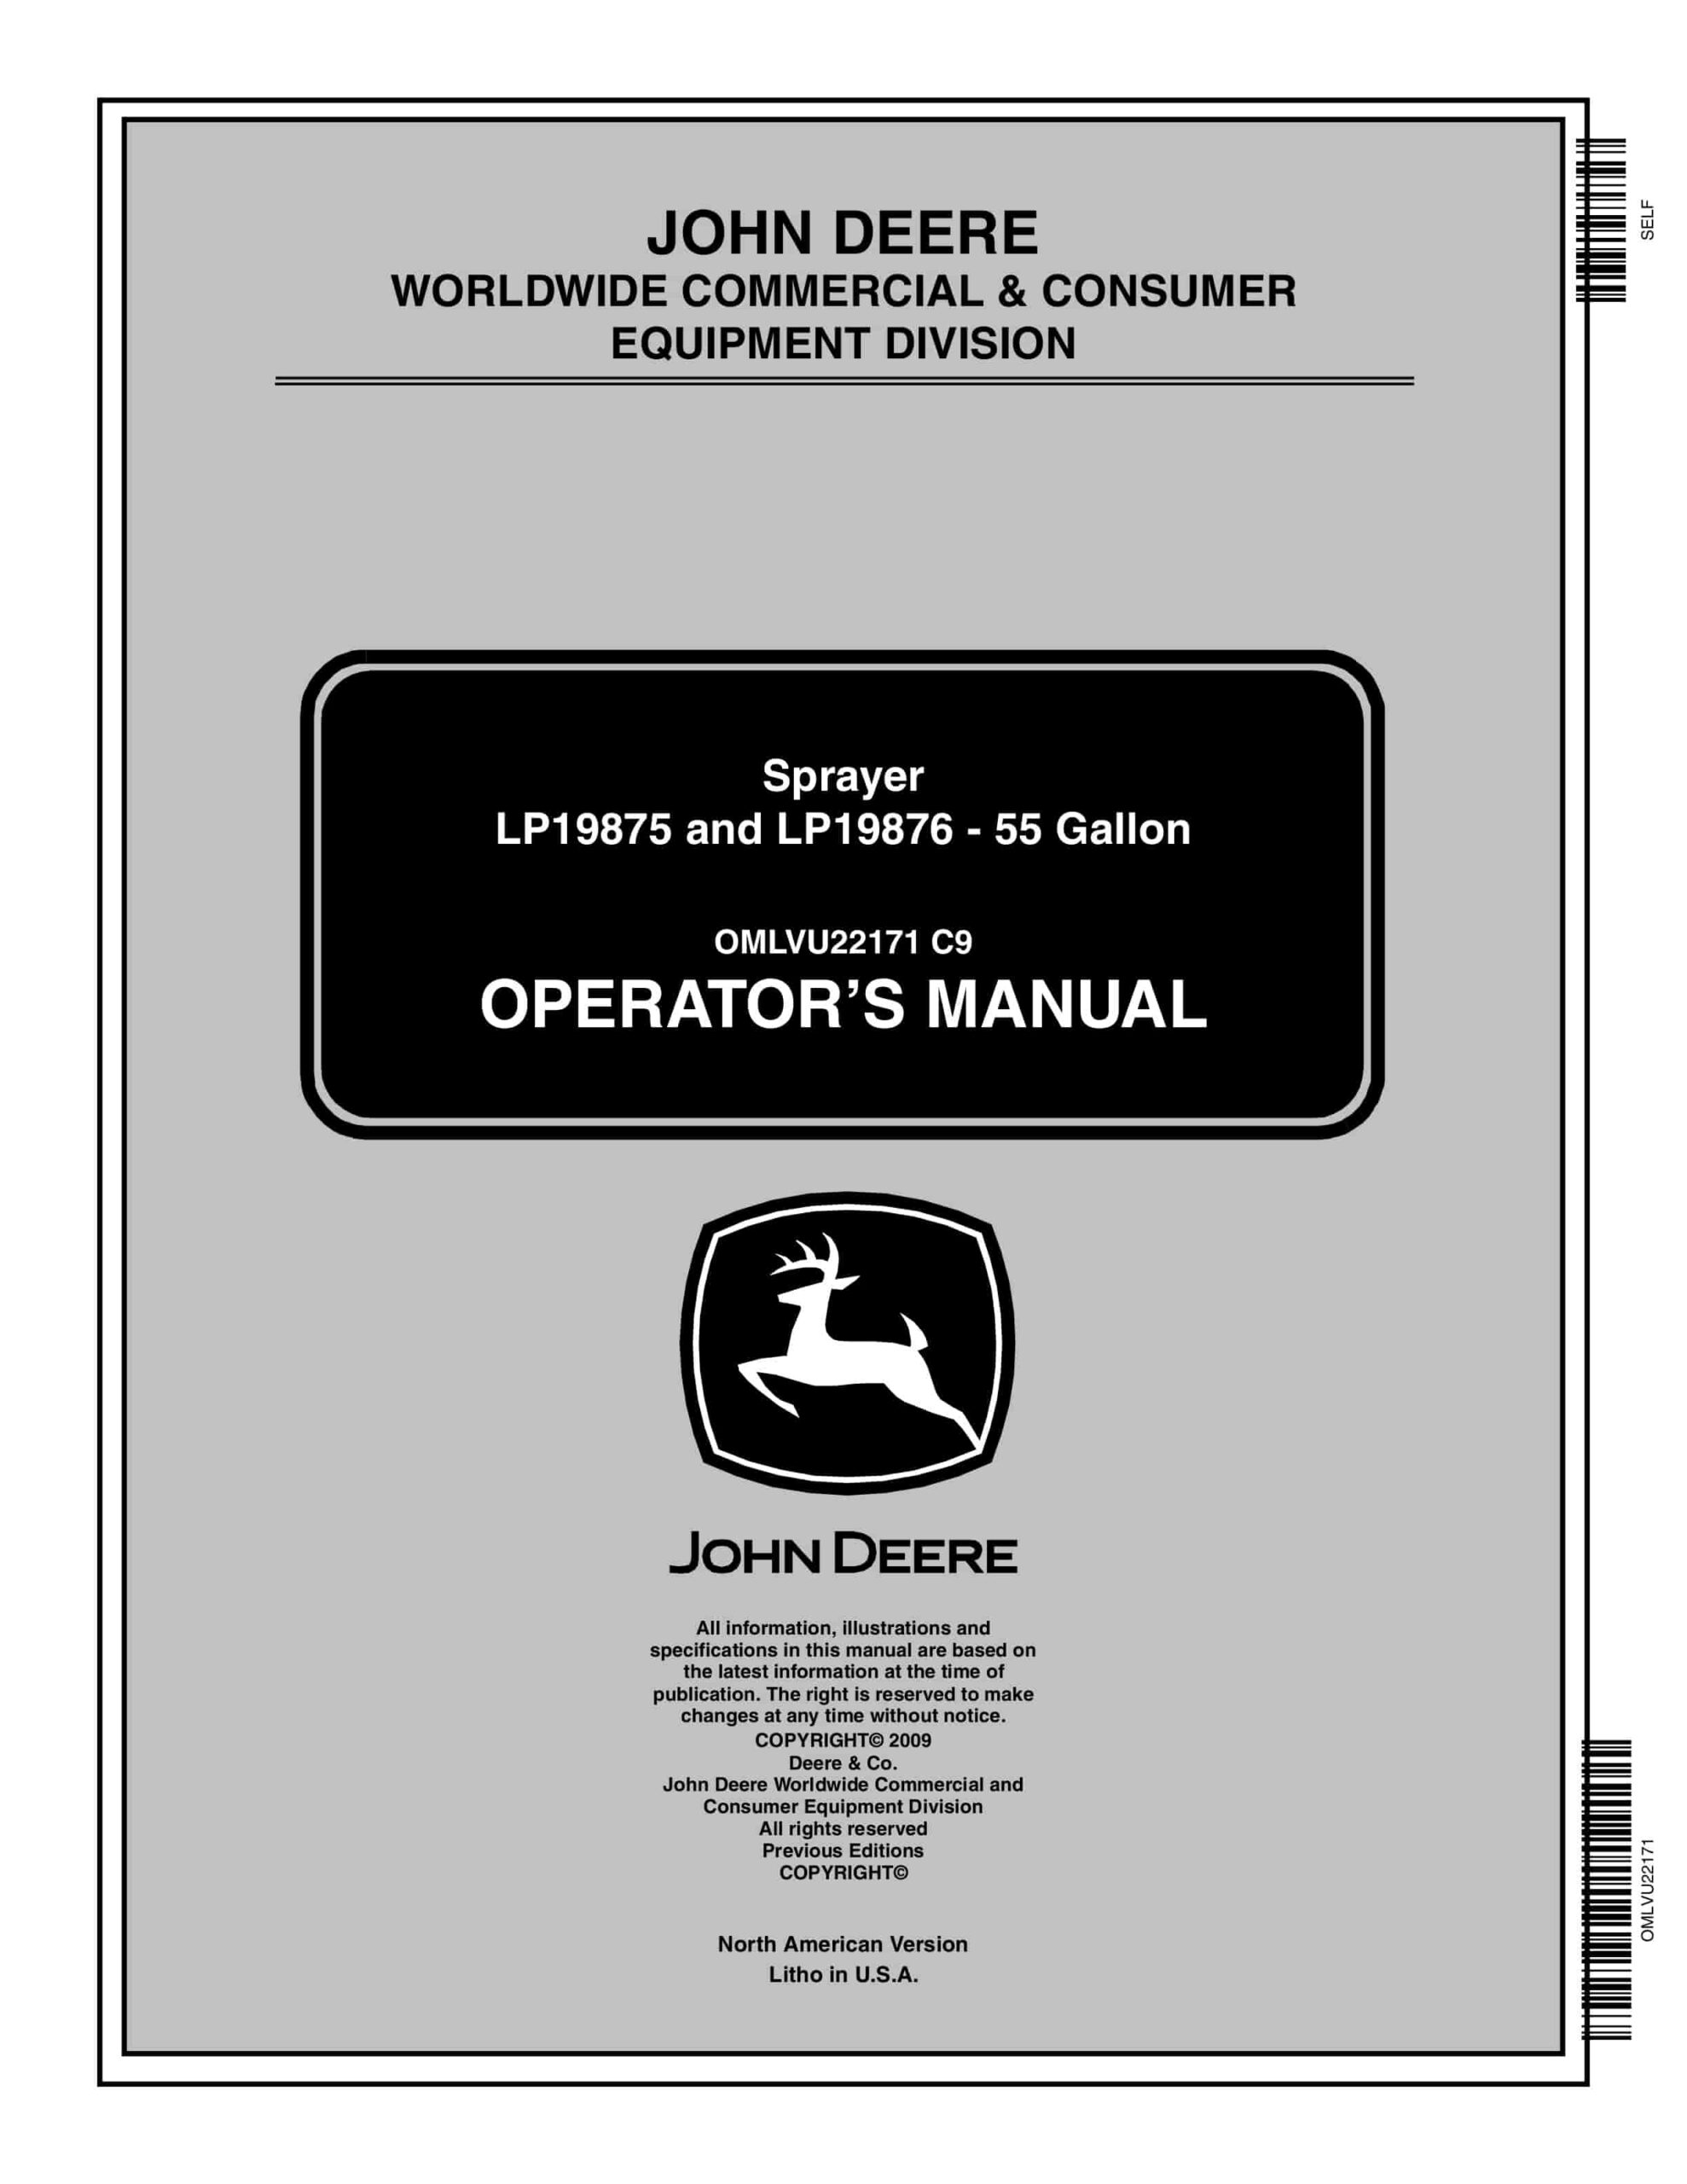 John Deere LP19875 and LP19876 – 55 Gallon Sprayer Operator Manual OMLVU22171-1